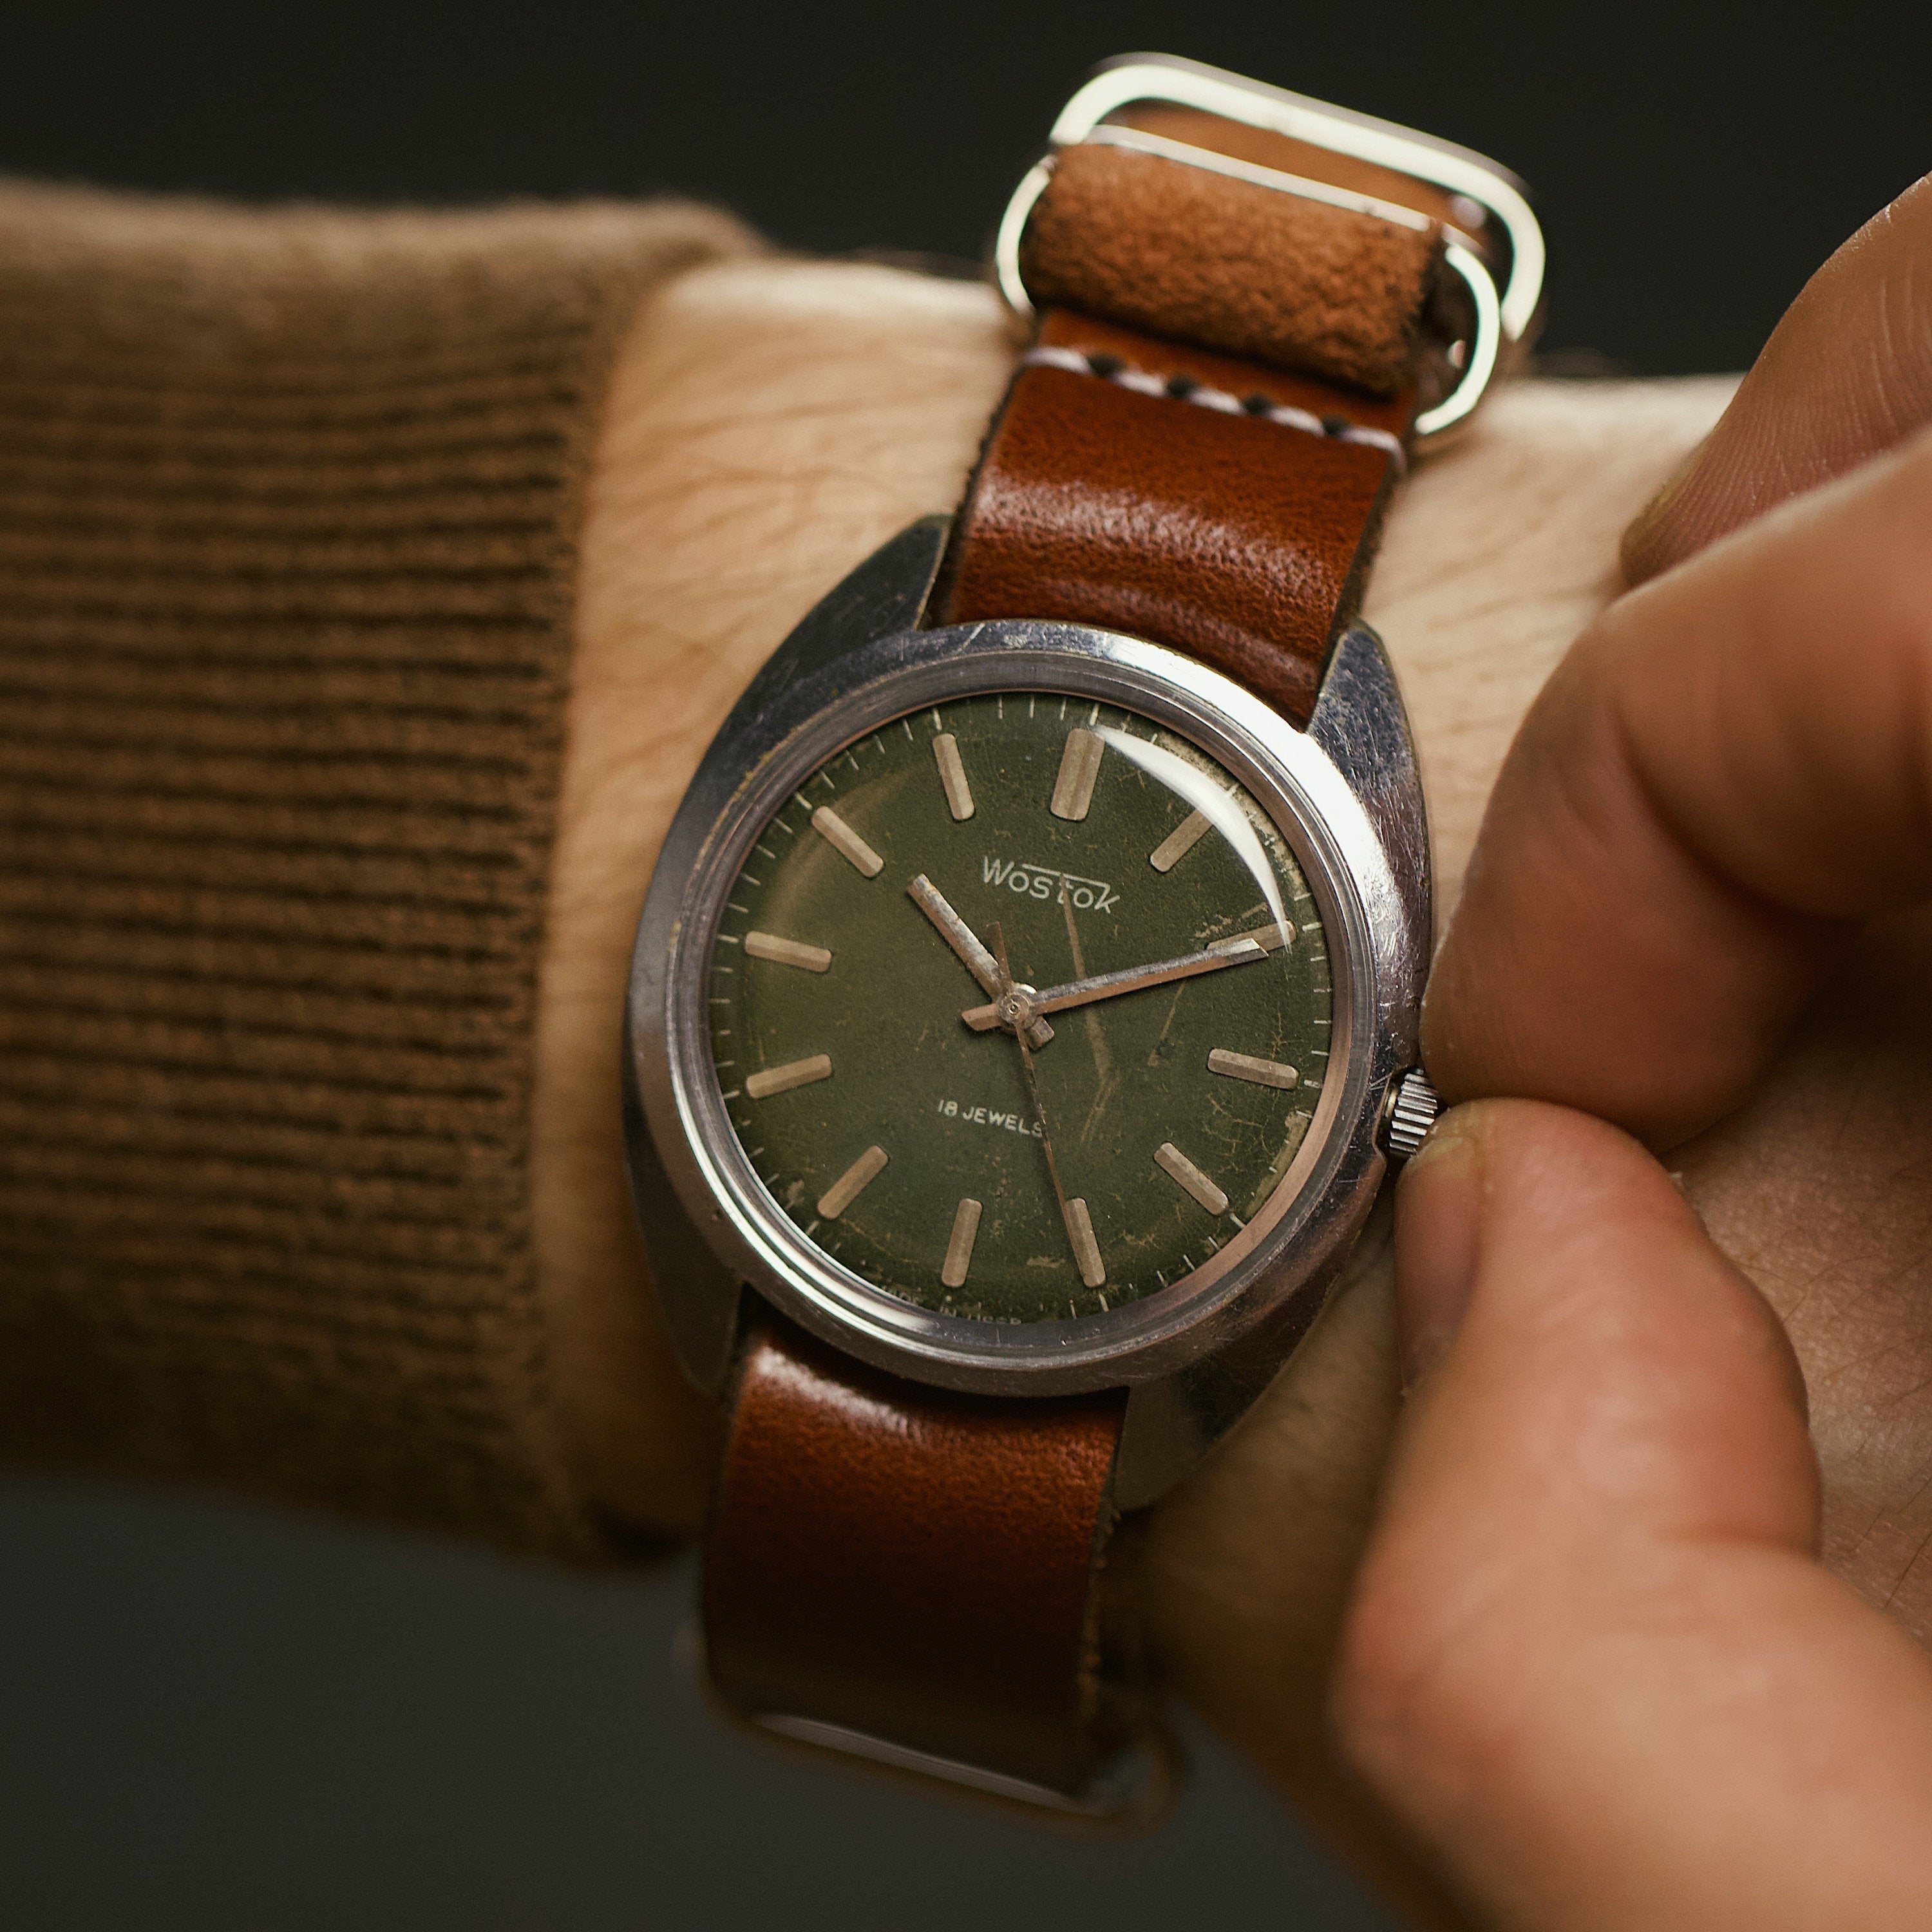 Soviet vintage very rare watch Vostok with leather nato strap